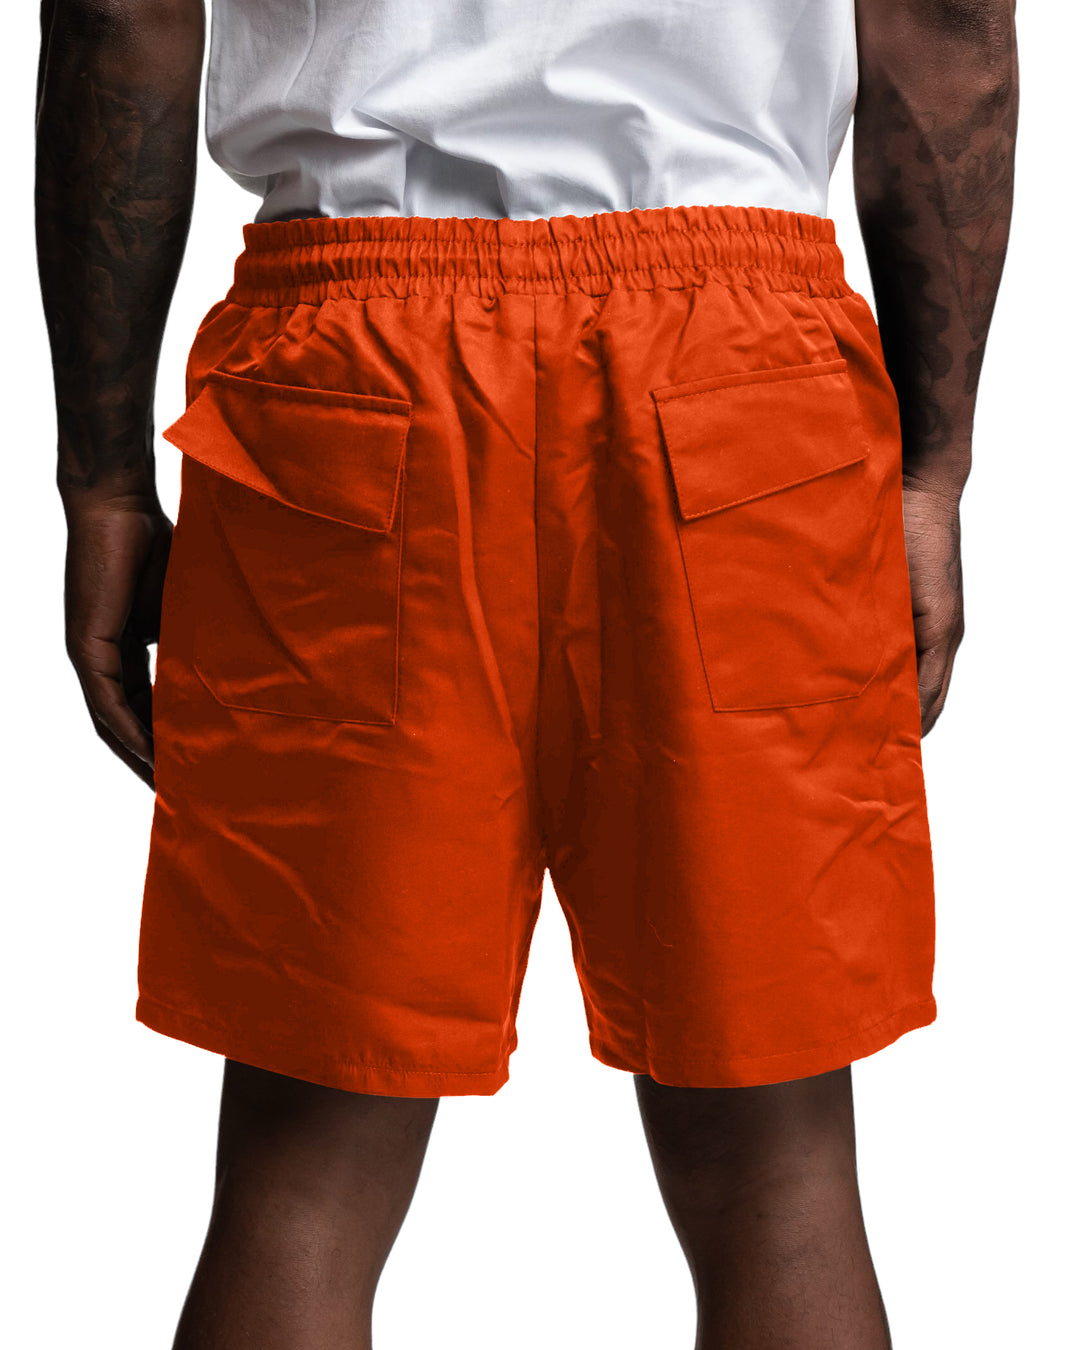 Sideline Shorts in Orange/White